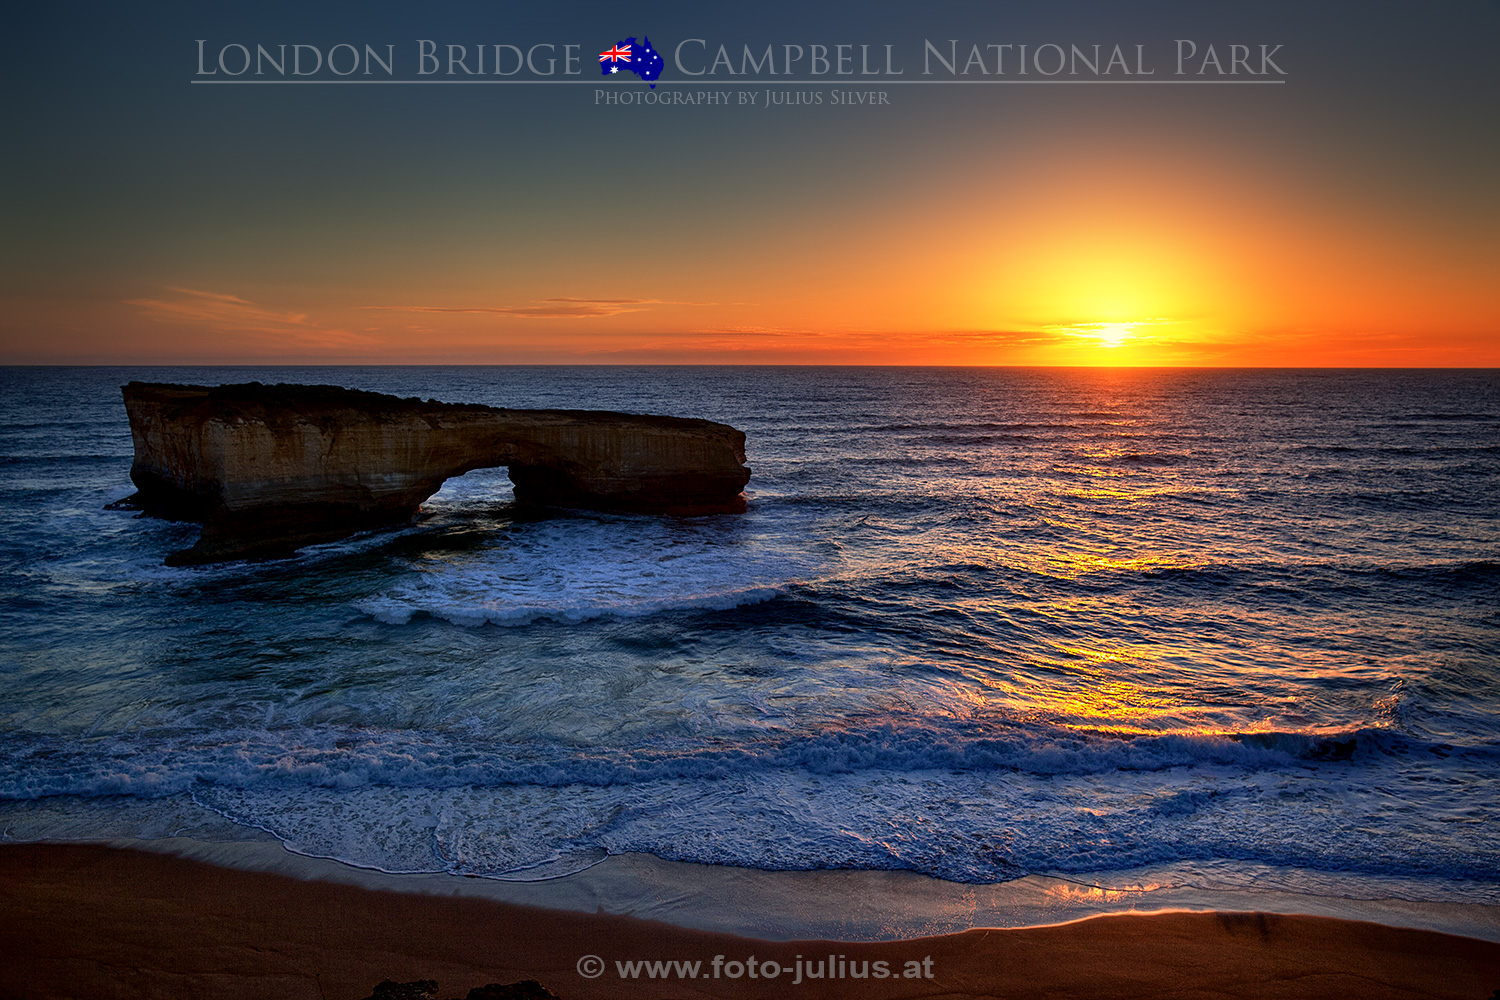 Australia_133a_London_Bridge_Port_Campbell.jpg, 662kB